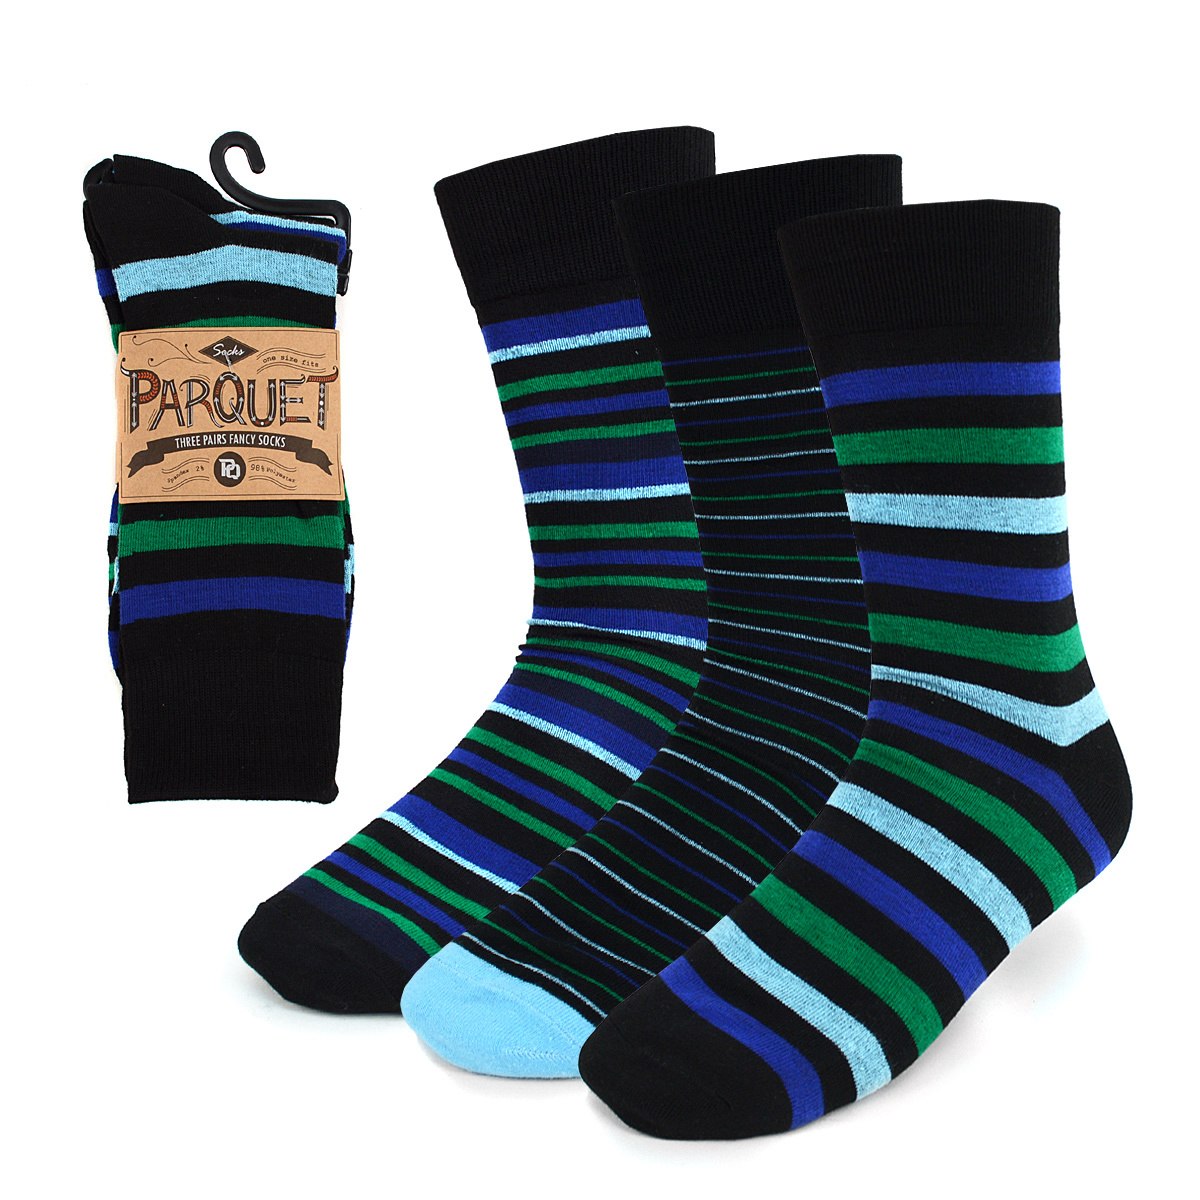 Parquet Men's Fancy, Dress, Casual and Crew Fun Socks - 3 Pair Bundle (Stripes - Black, Blues & Greens)